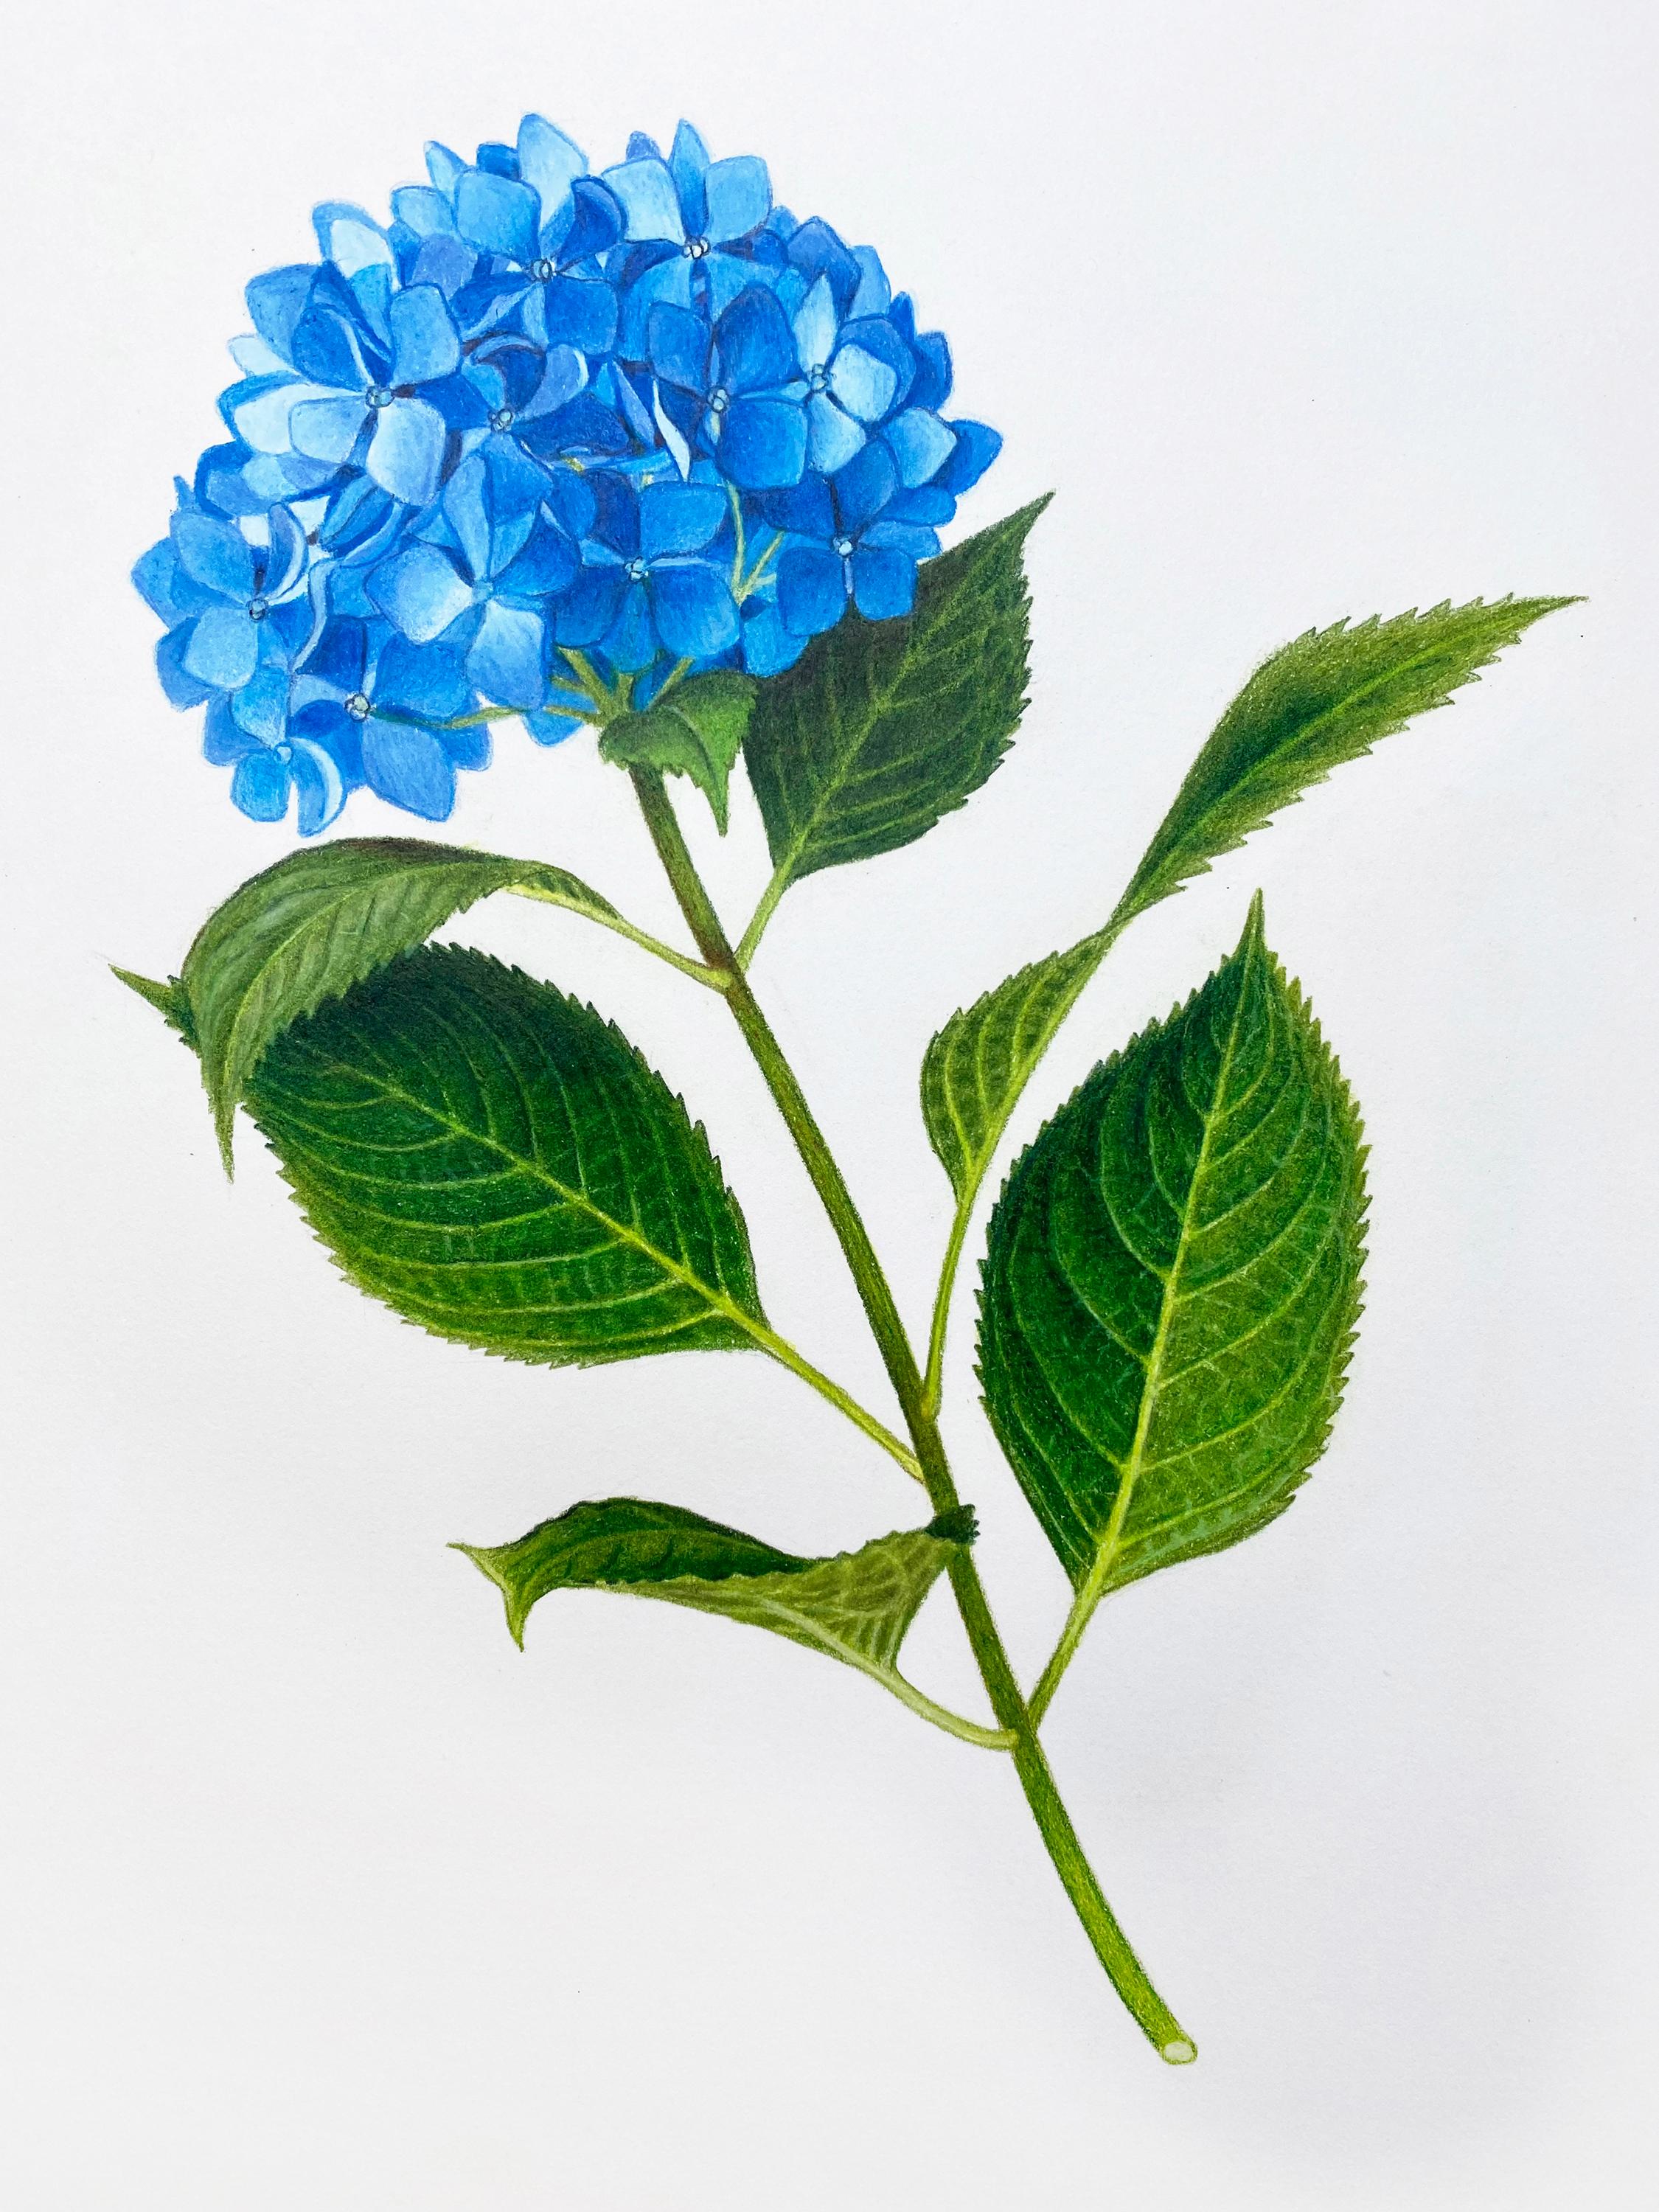 Hannah Hanlon Animal Art - 'Blue Hydrangea' - floral illustration - colored pencil - botanical